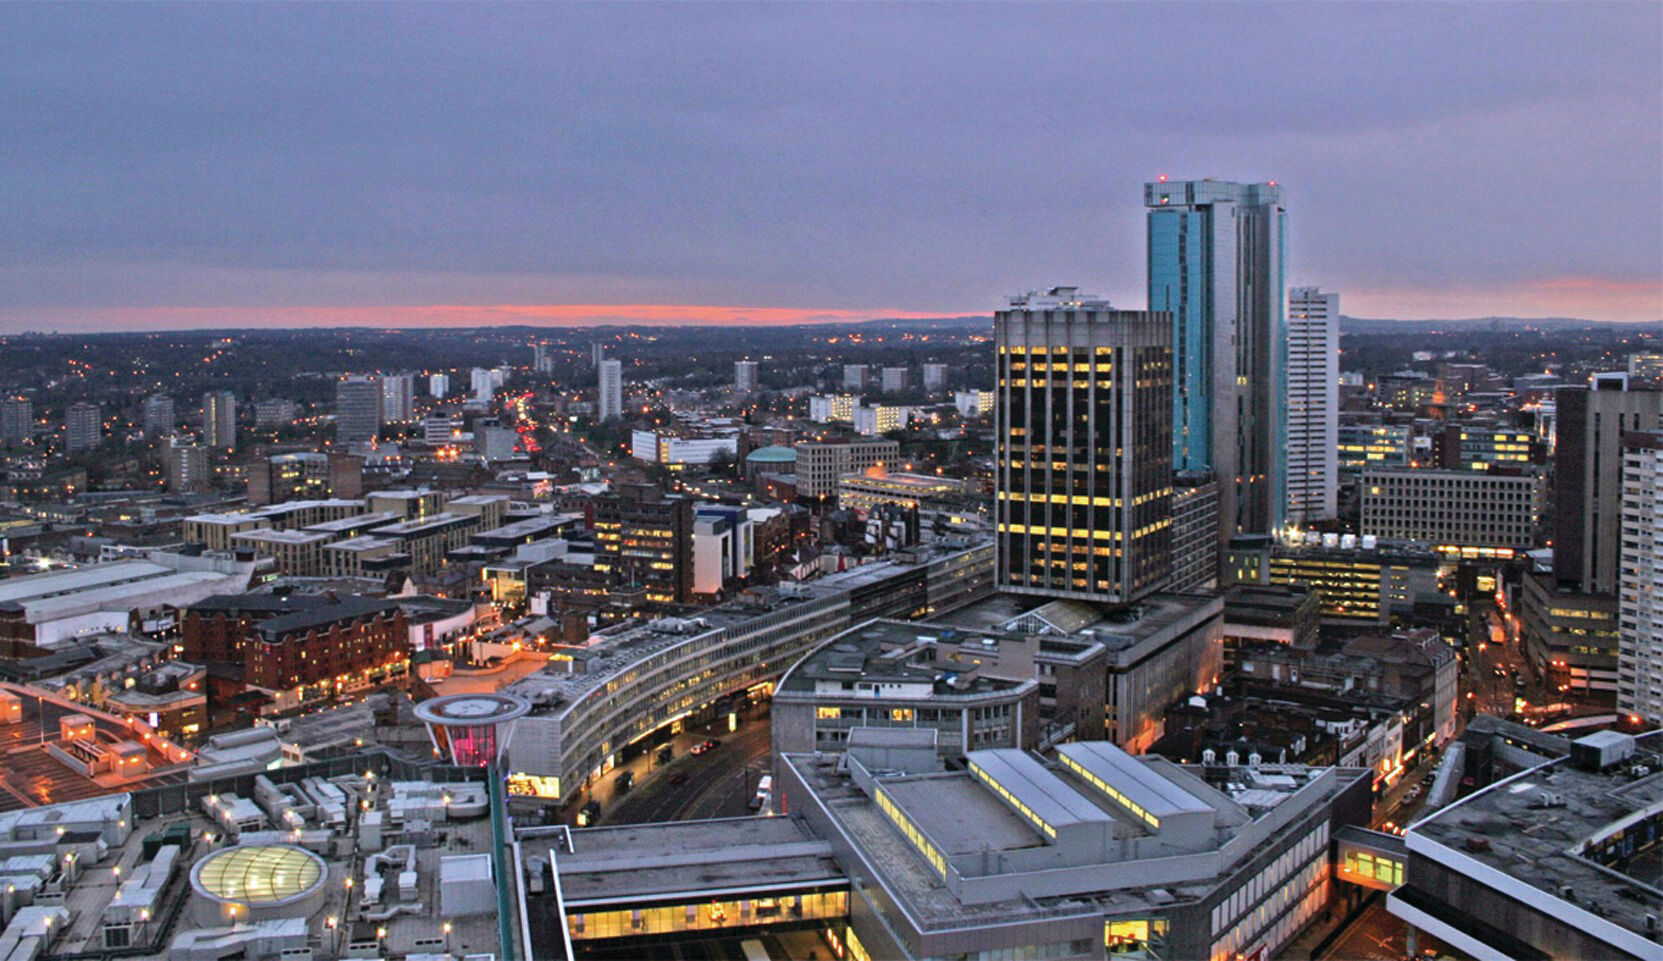 Birmingham City Skyline at night